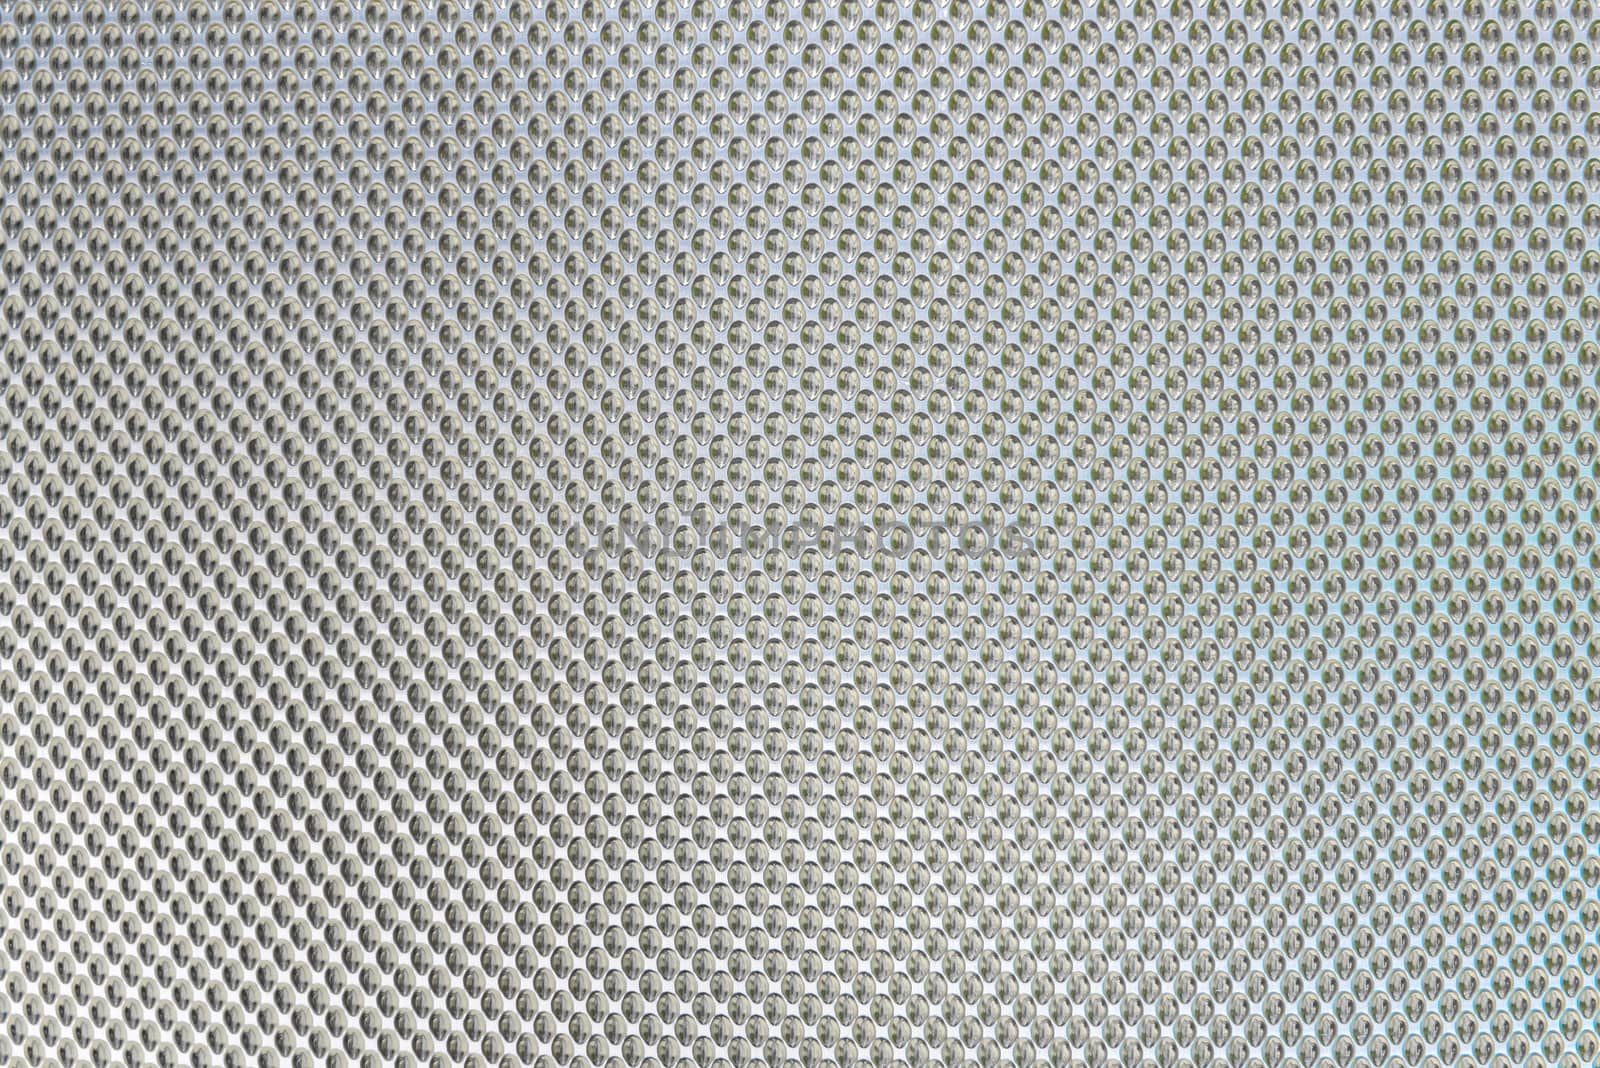 texture metal background of brushed steel plate by casanowe